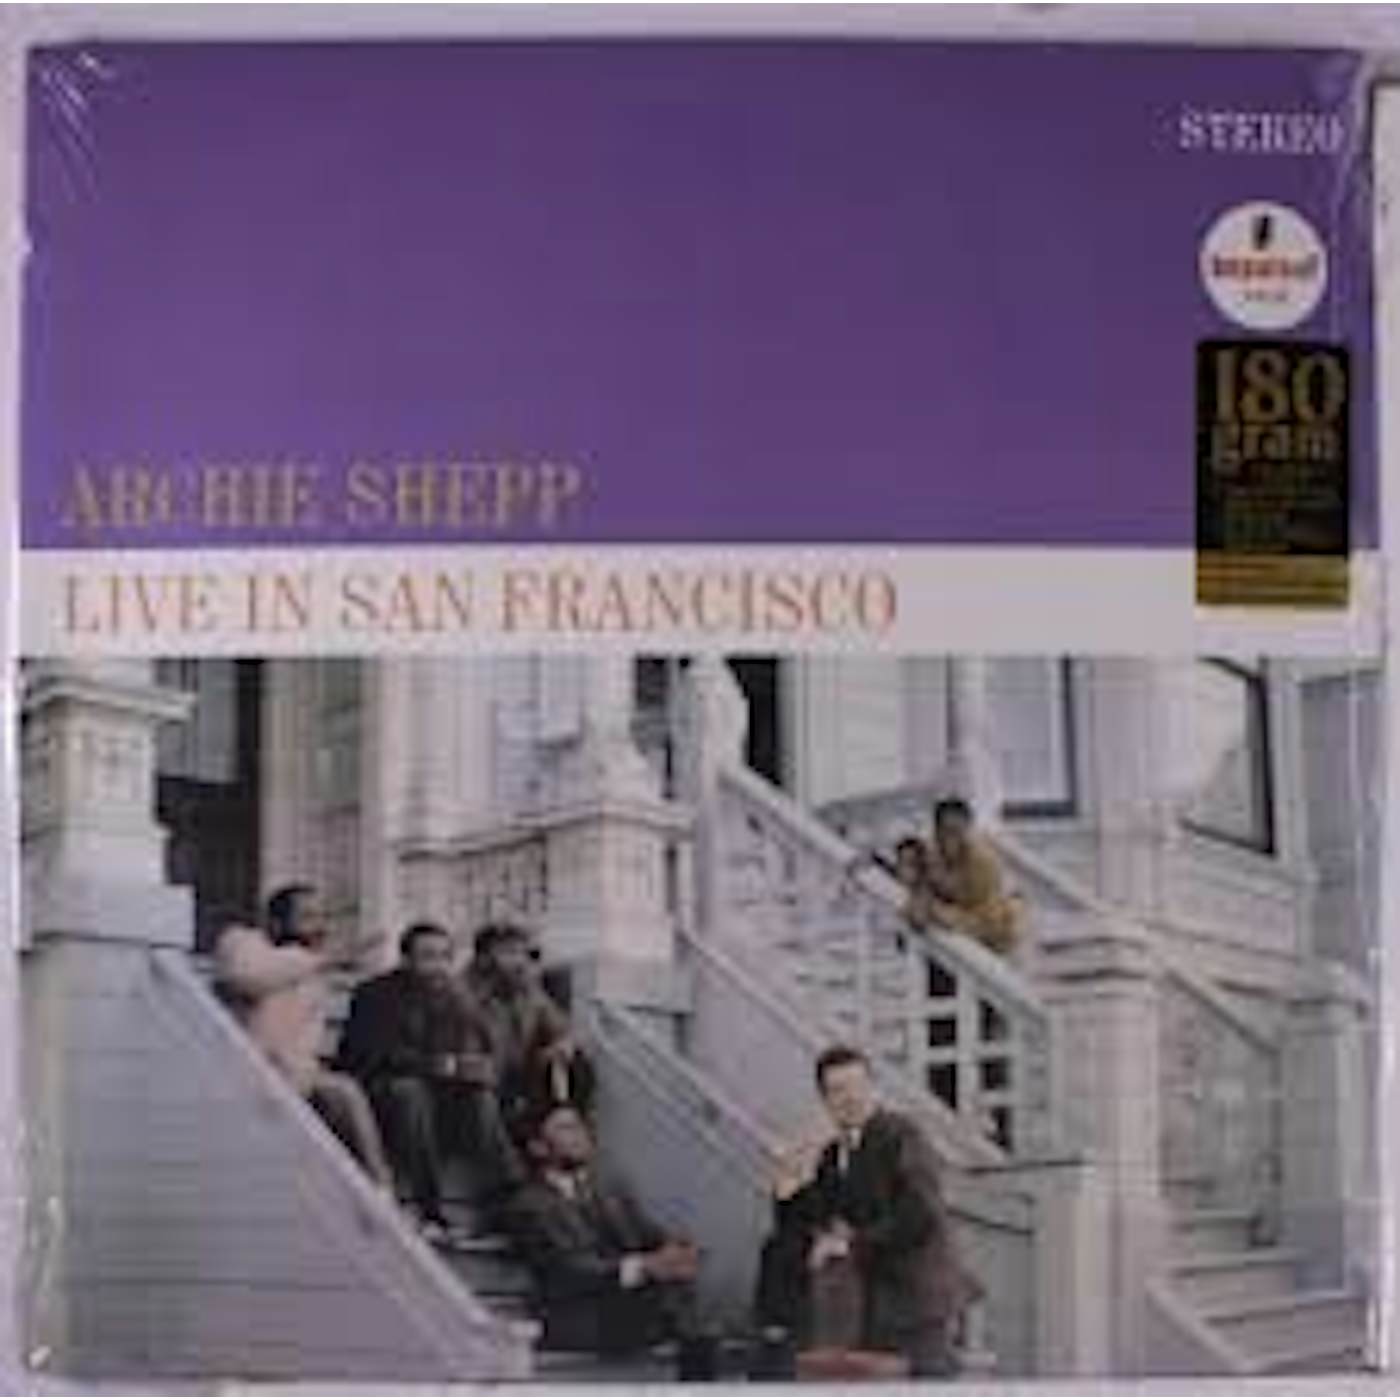 Archie Shepp Live in San Francisco Vinyl Record